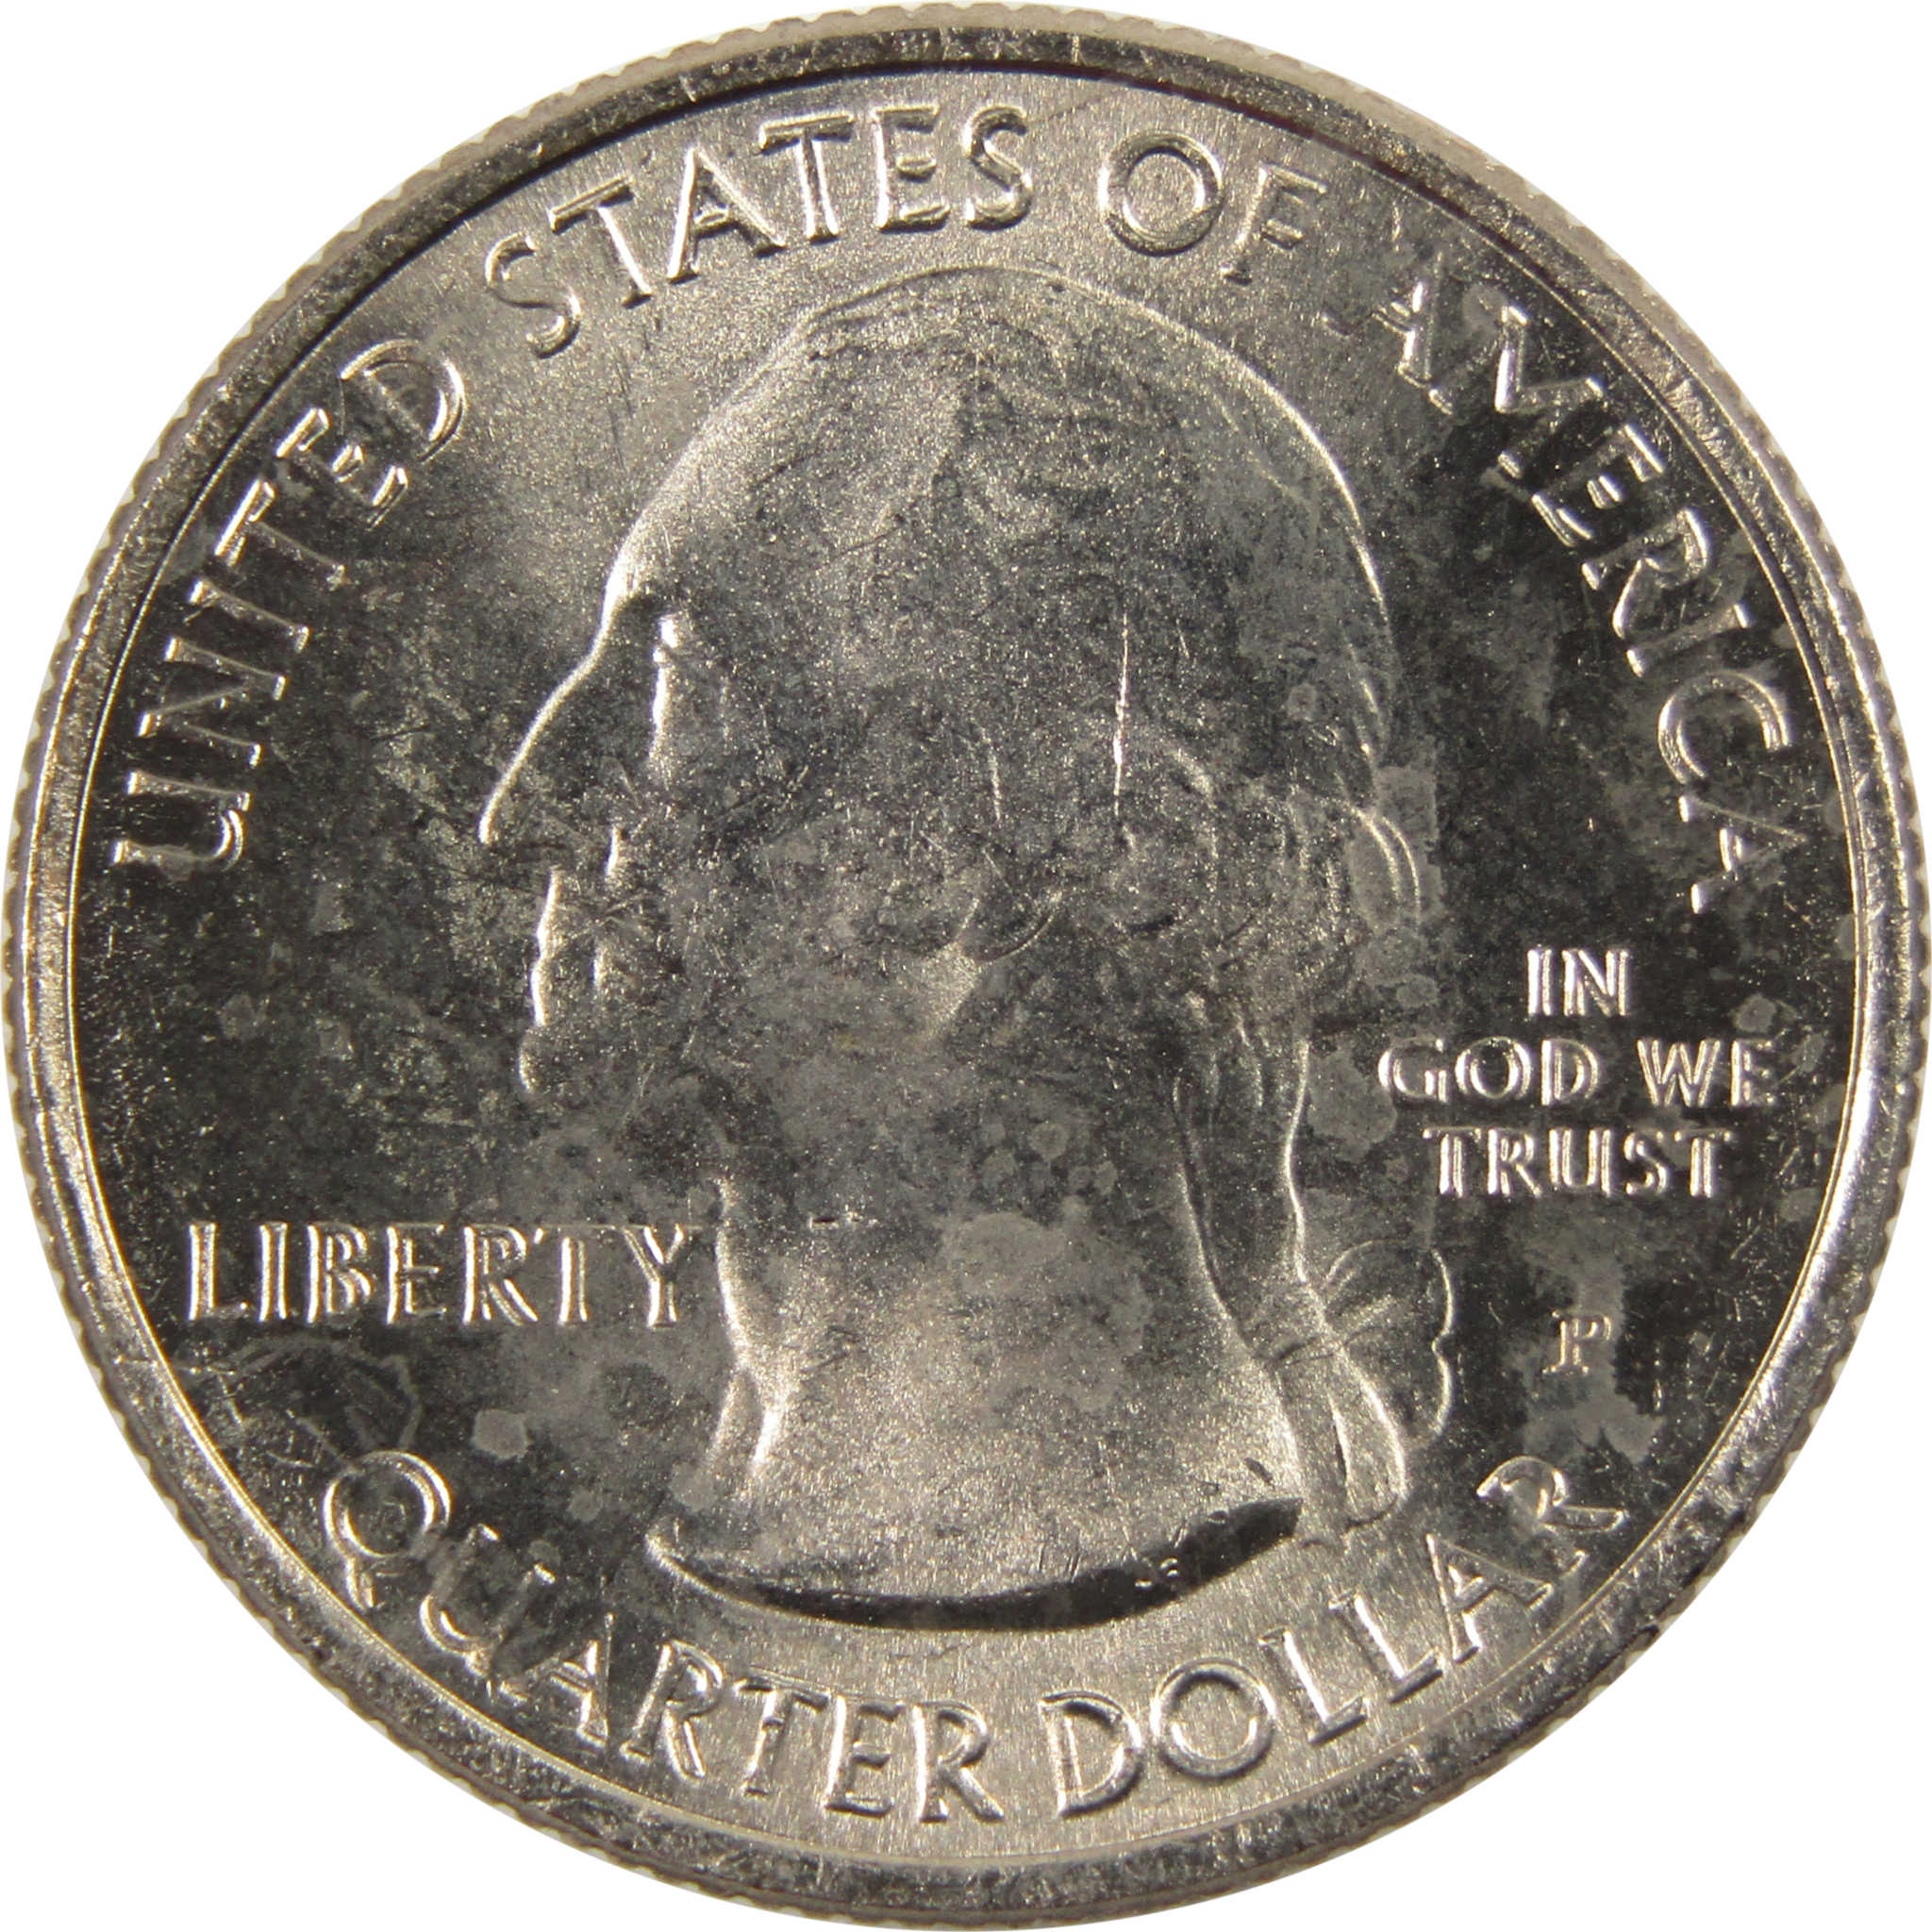 2010 P Yosemite National Park Quarter BU Uncirculated Clad 25c Coin